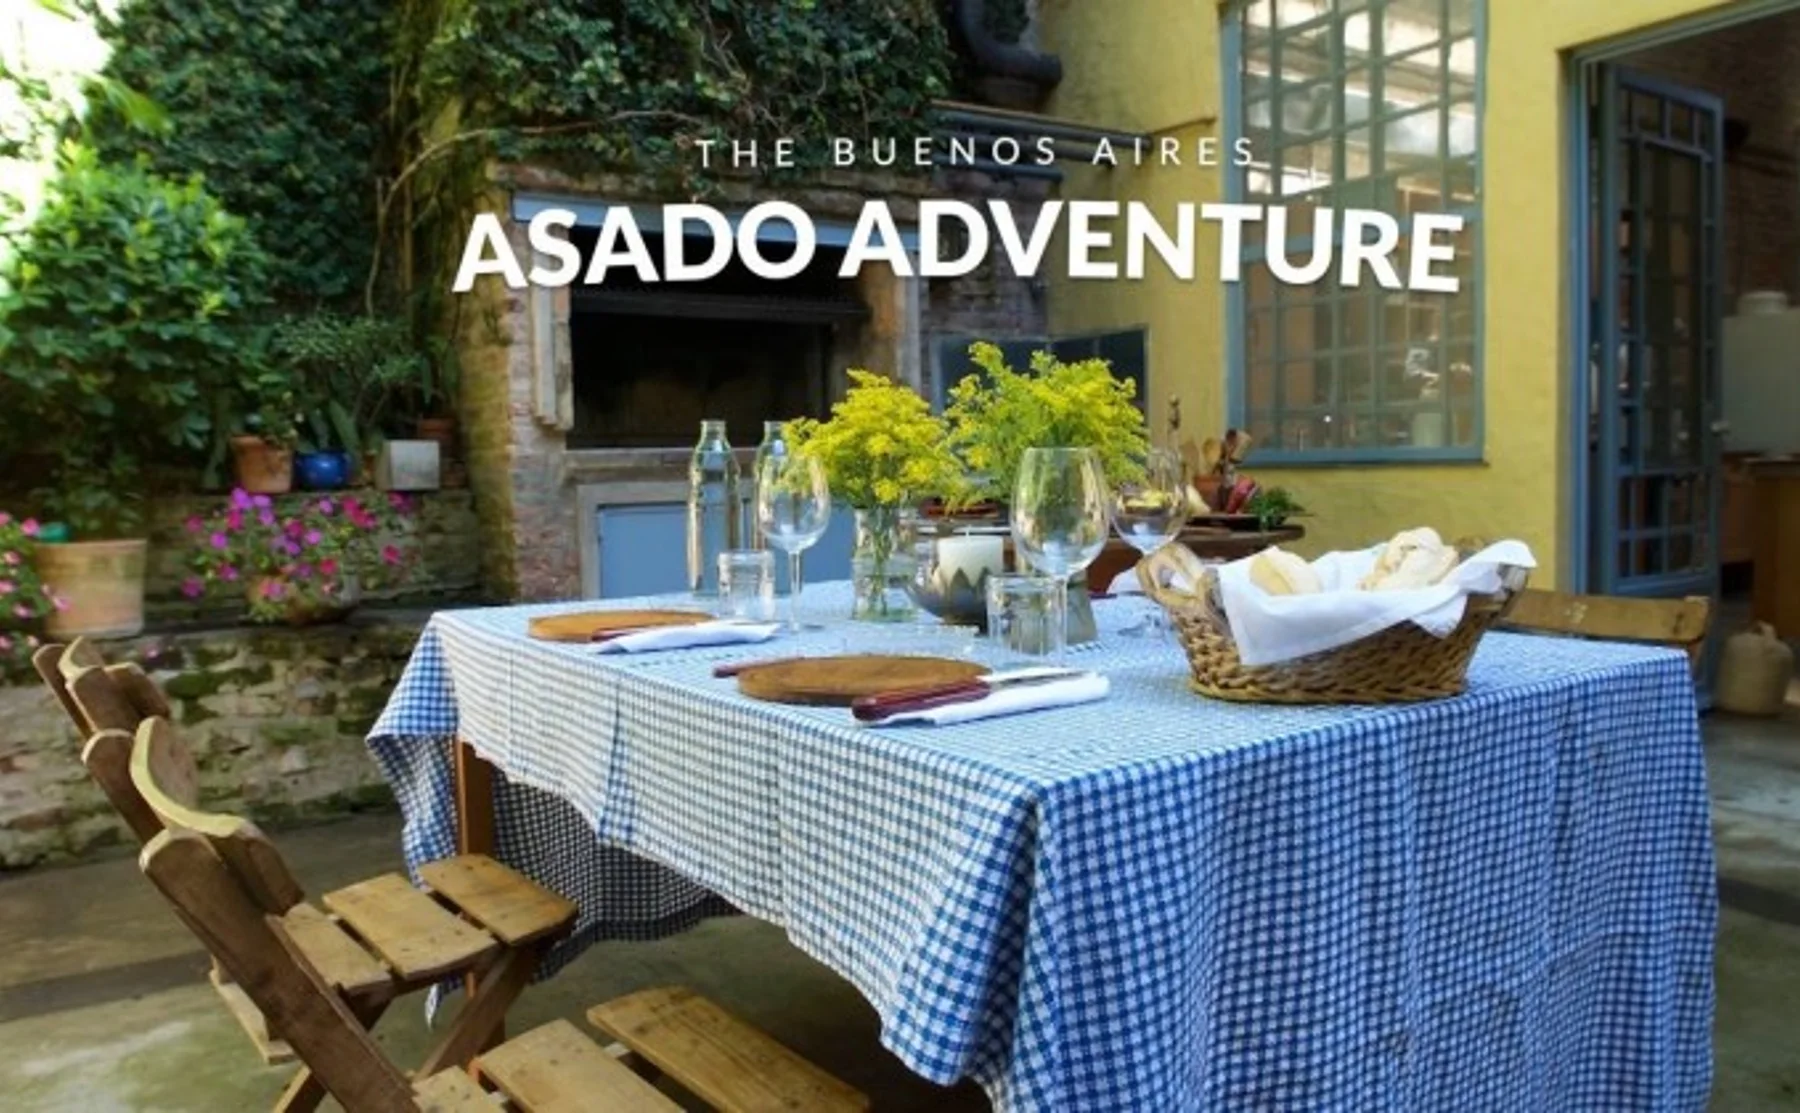 Full AsadoAdventure (Grilling and Neighborhood) Tour - 425975